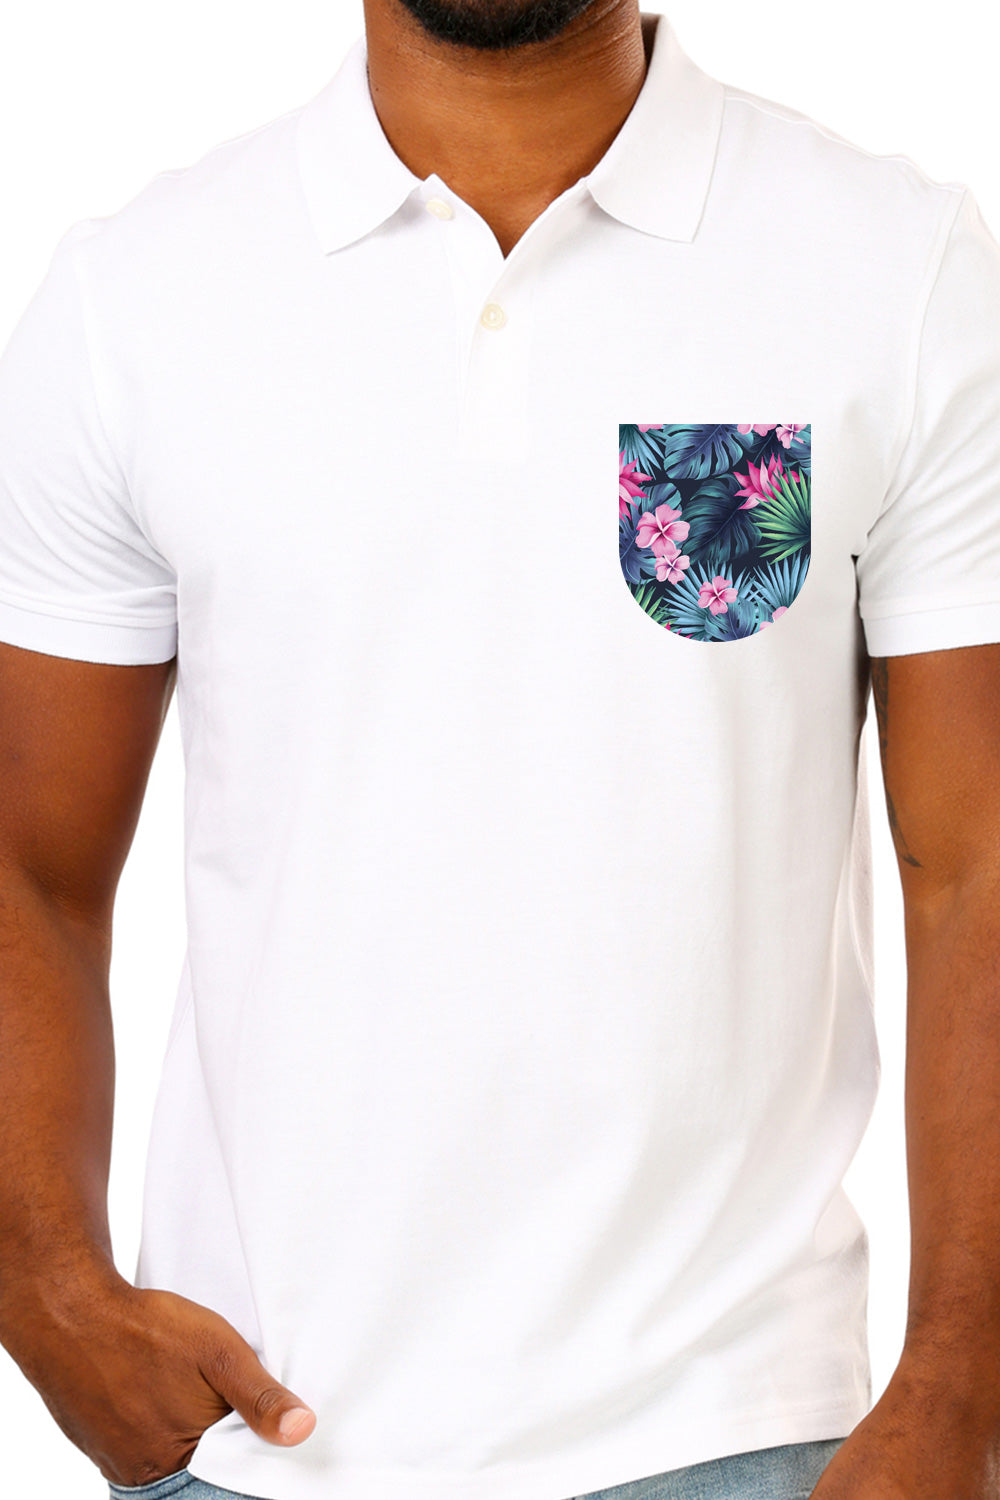 White Premium Polo T-Shirt with Tropical Savannah Graphics on Pocket Printed